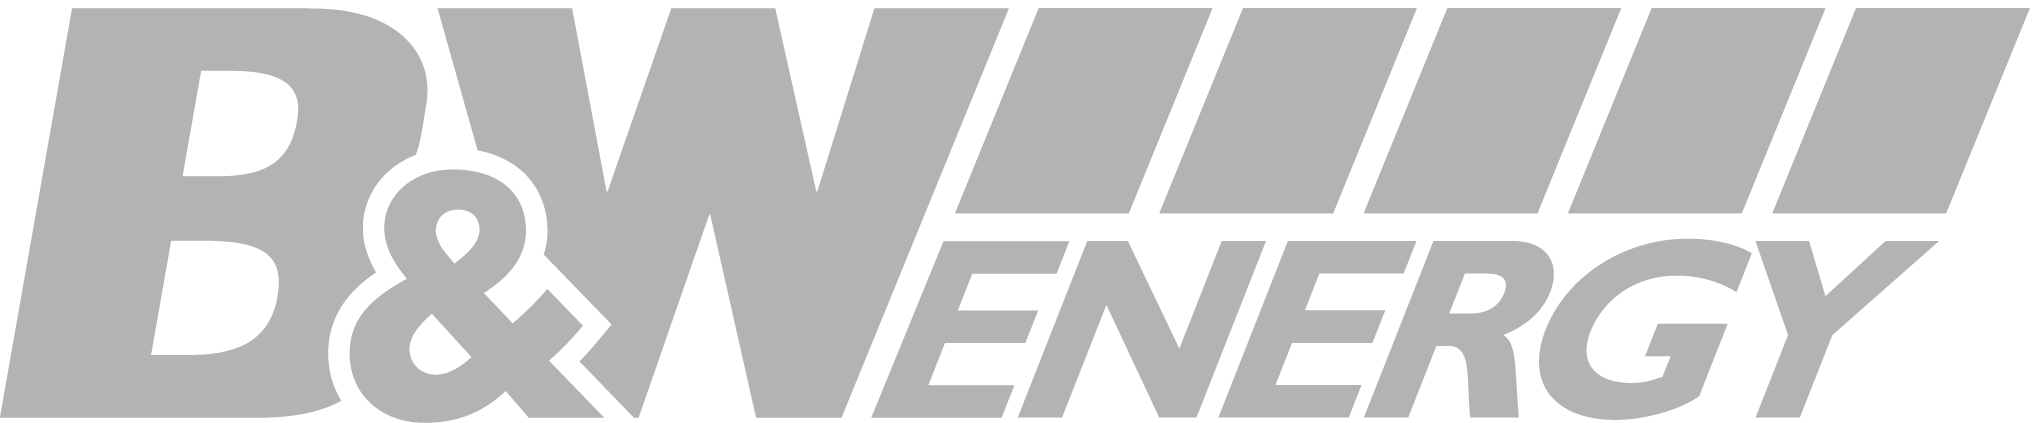 B&W Energy GmbH & Co. KG logo